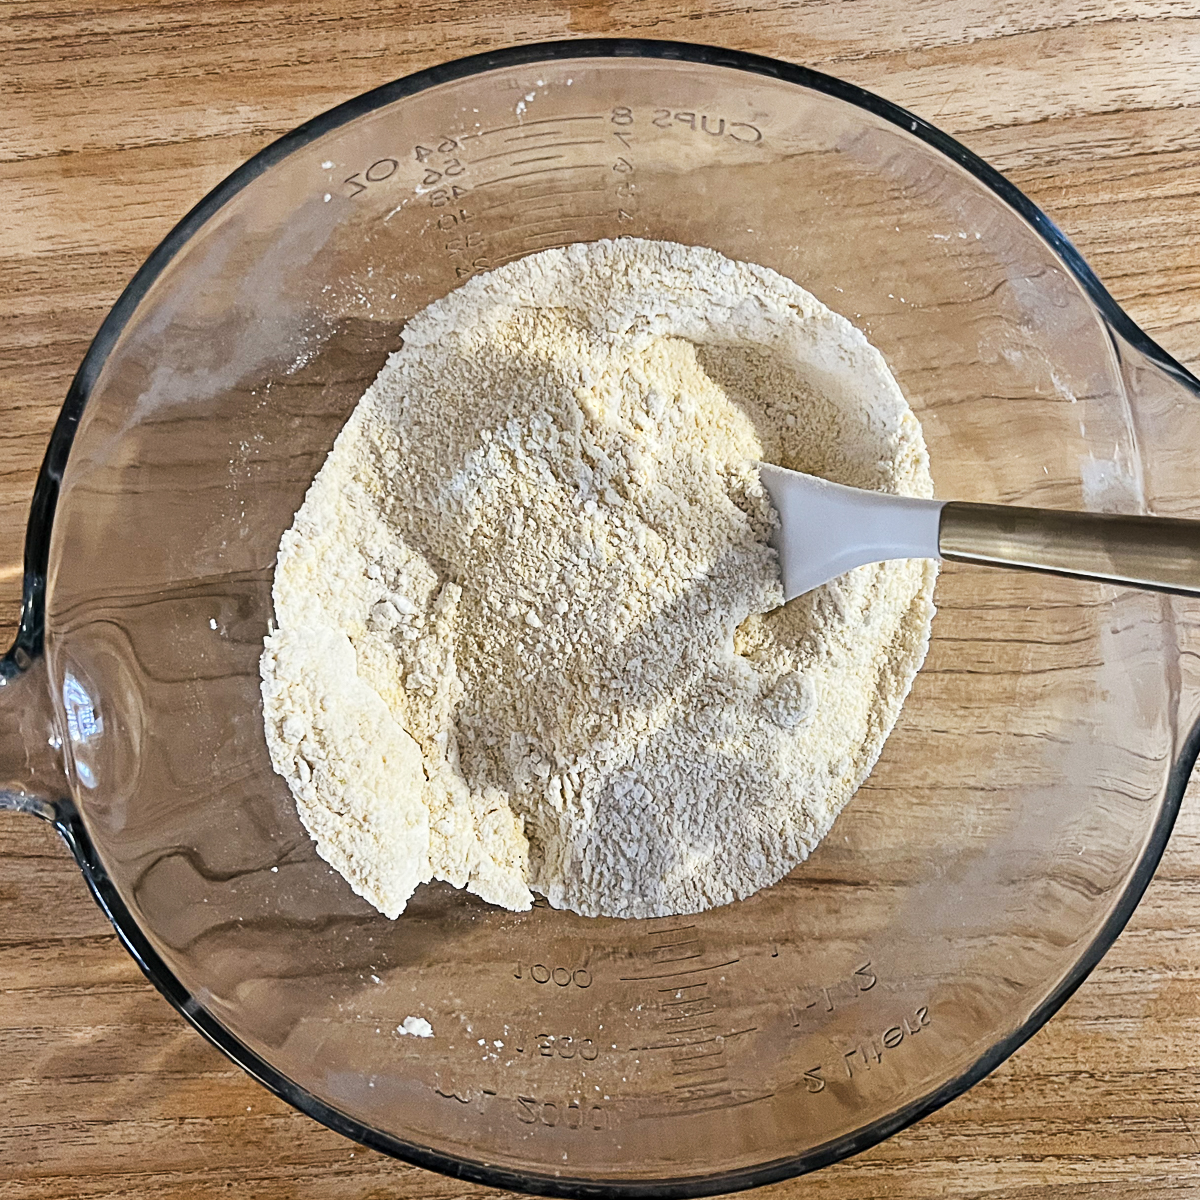 Cracker Barrel Cornbread Muffins Copycat Recipe Step 1 - Mix dry ingredients